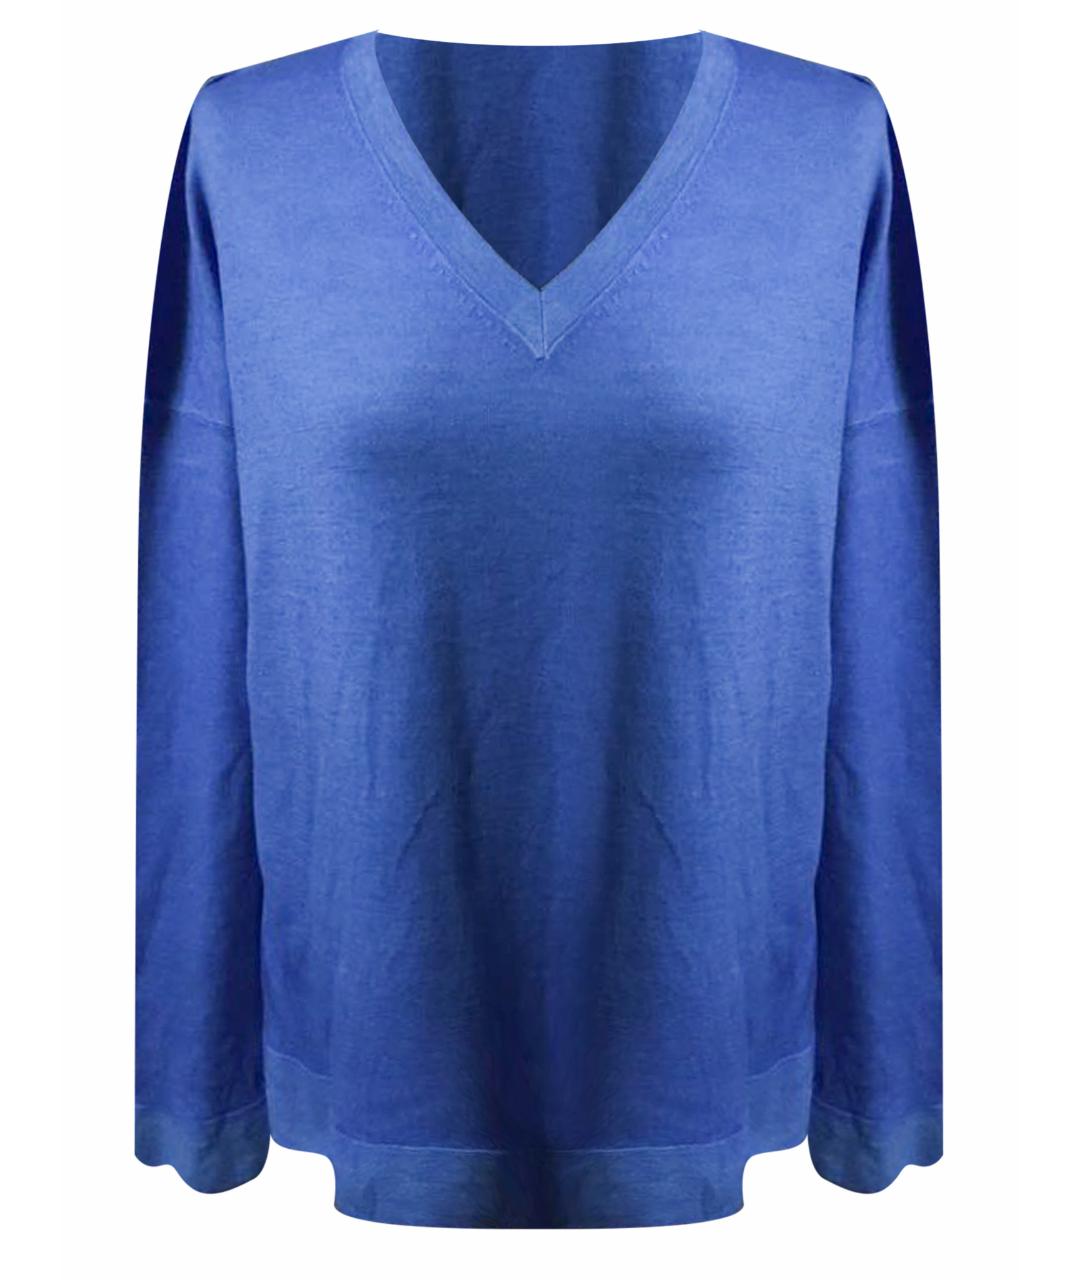 GRAN SASSO Синий шерстяной джемпер / свитер, фото 1